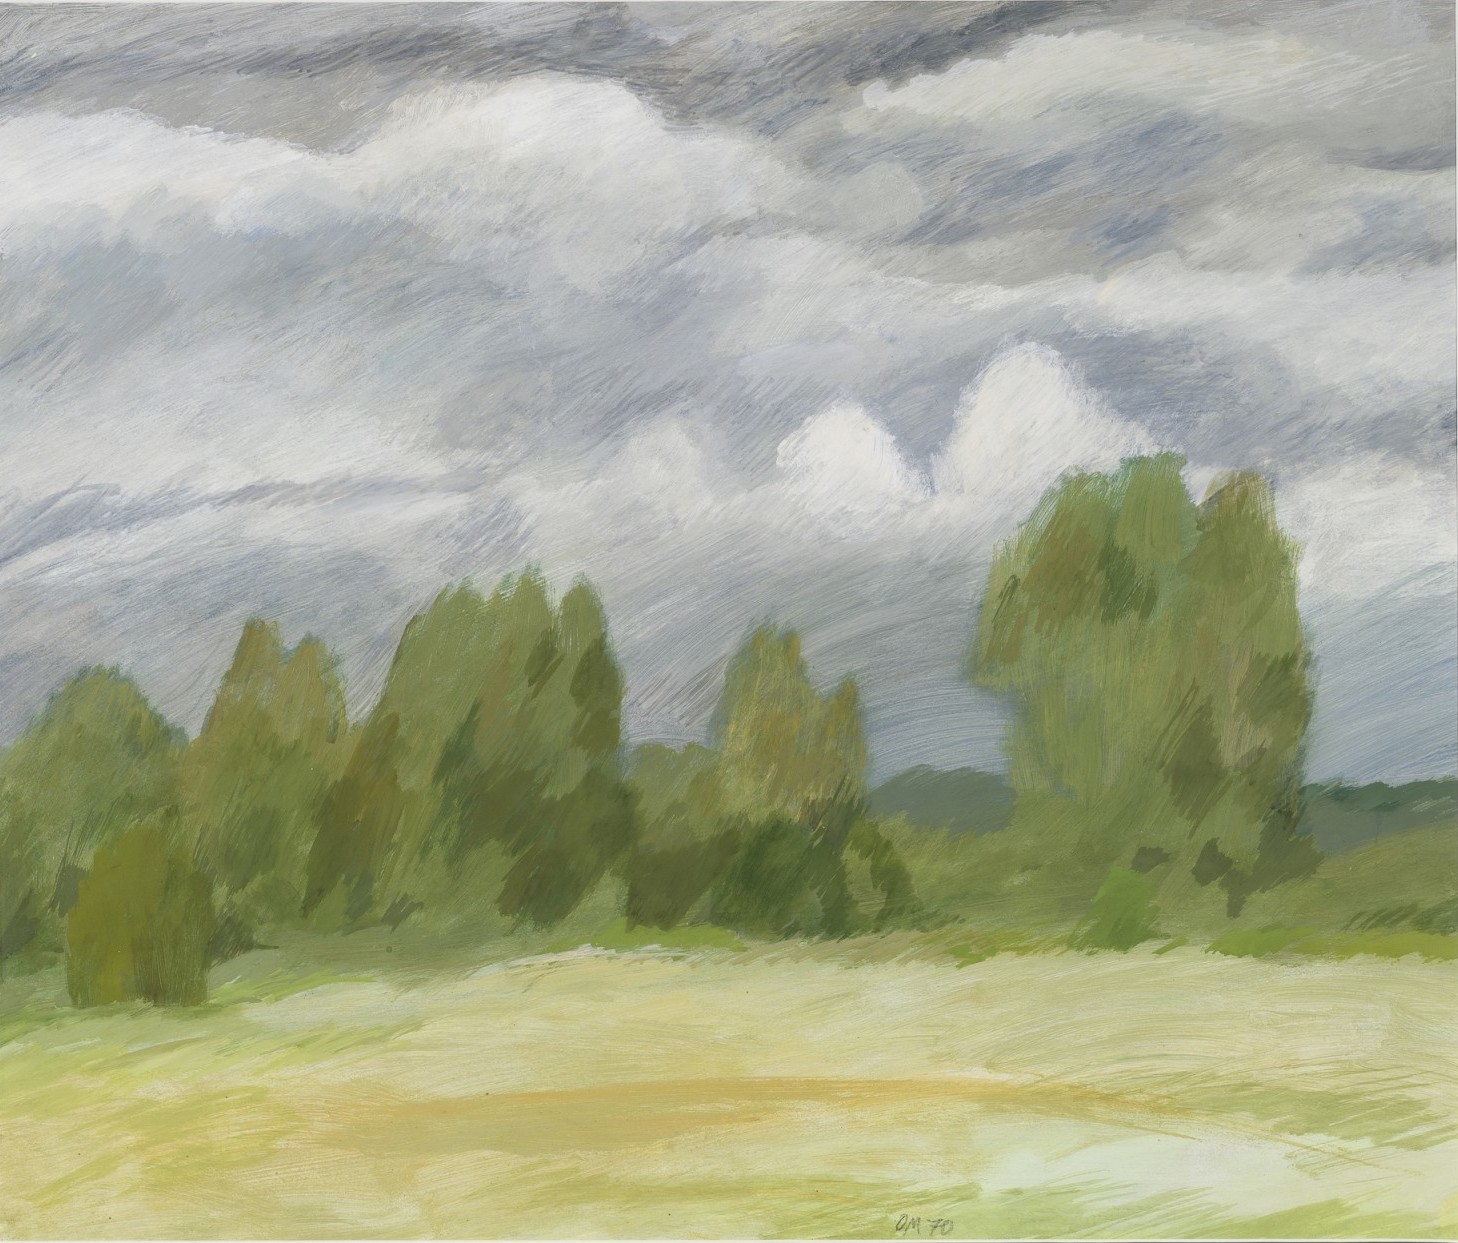 Olav Maran "Cloudy Day"